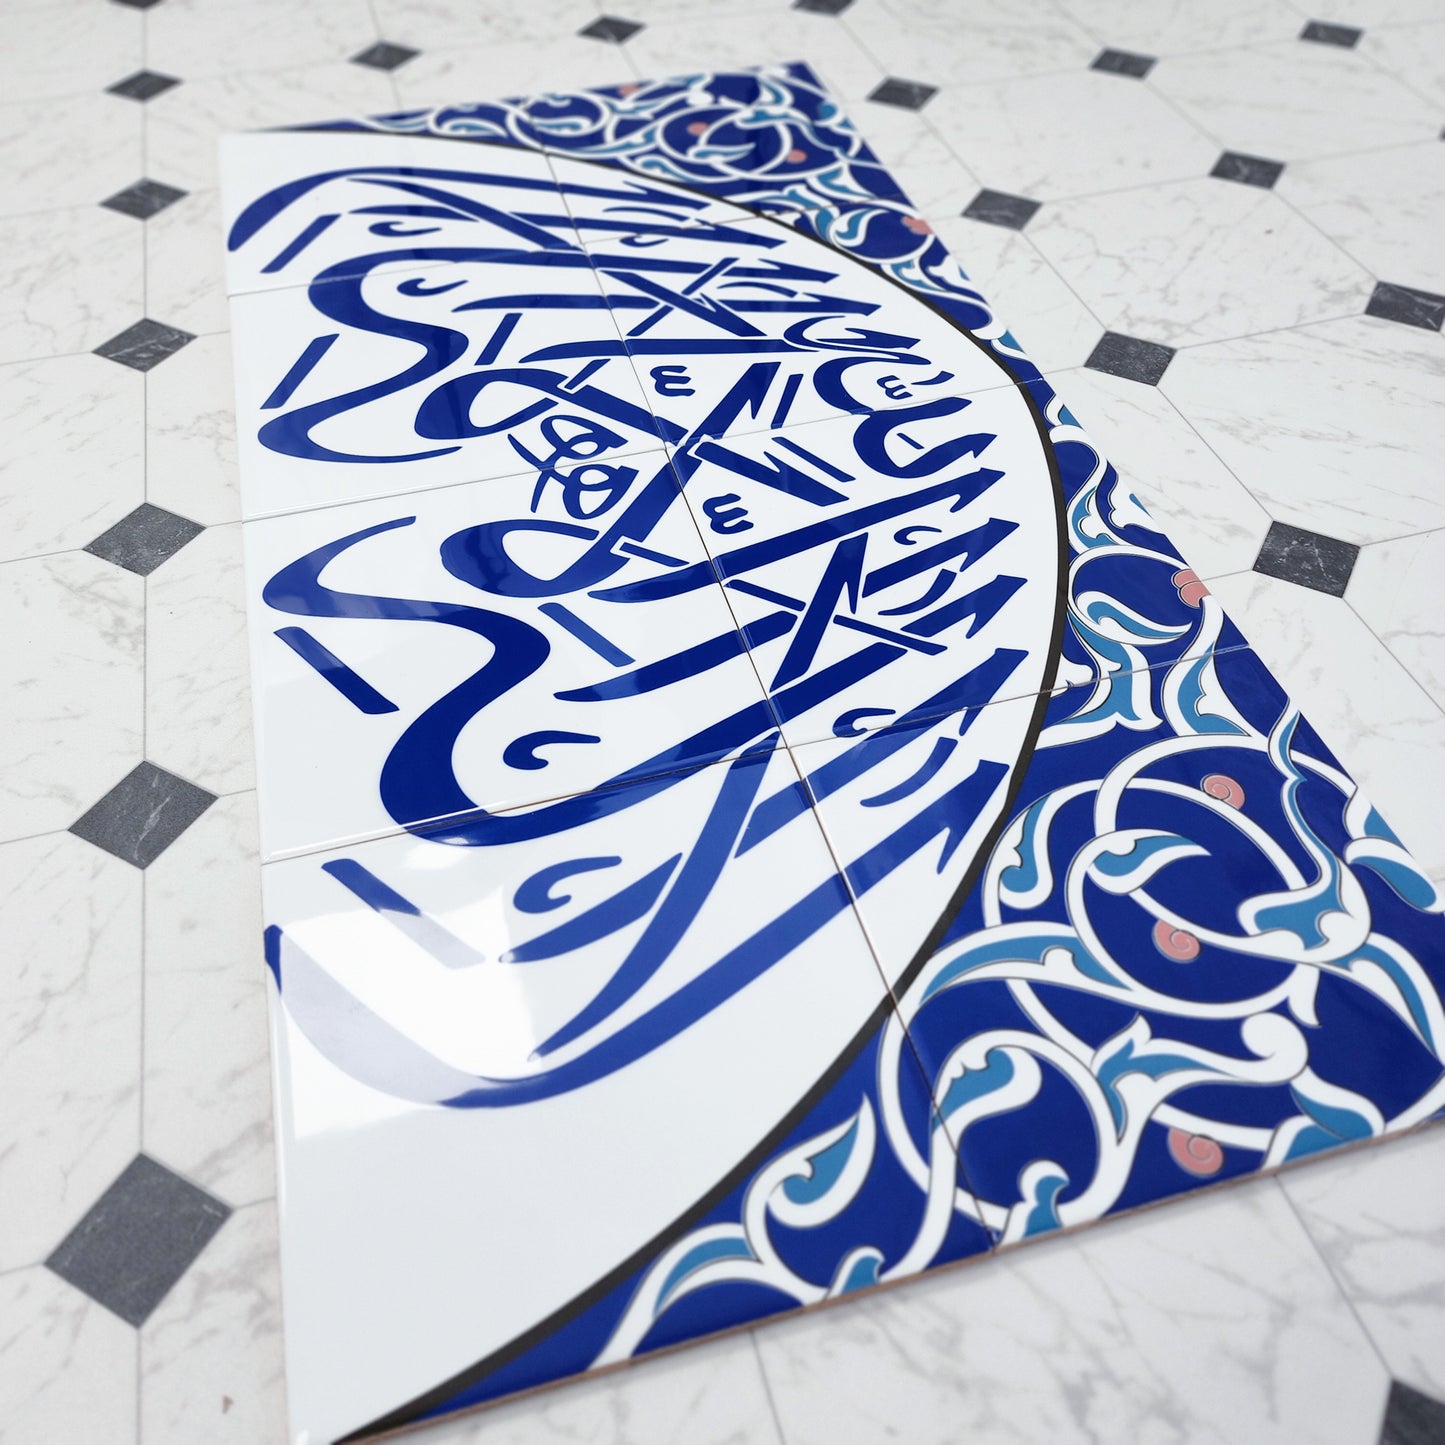 Kalimai Tavhid 16x31 Blue - Islamic Art Calligraphy Ceramic Tile